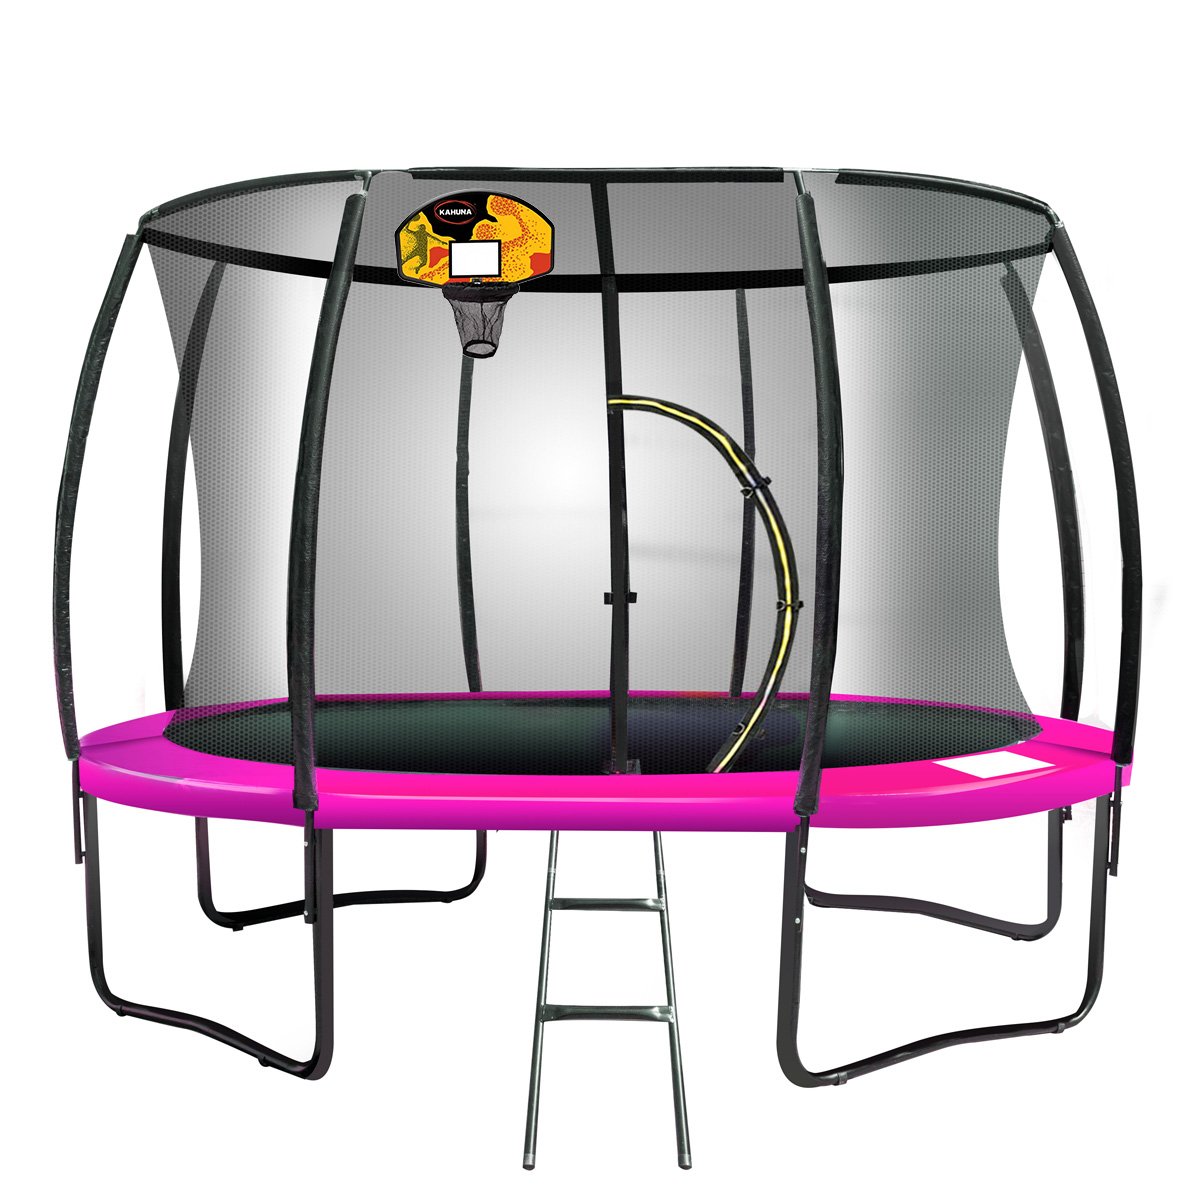 Kahuna 16ft Outdoor Trampoline Kids Children With Safety Enclosure Pad Mat Ladder Basketball Hoop Set - Pink - SILBERSHELL